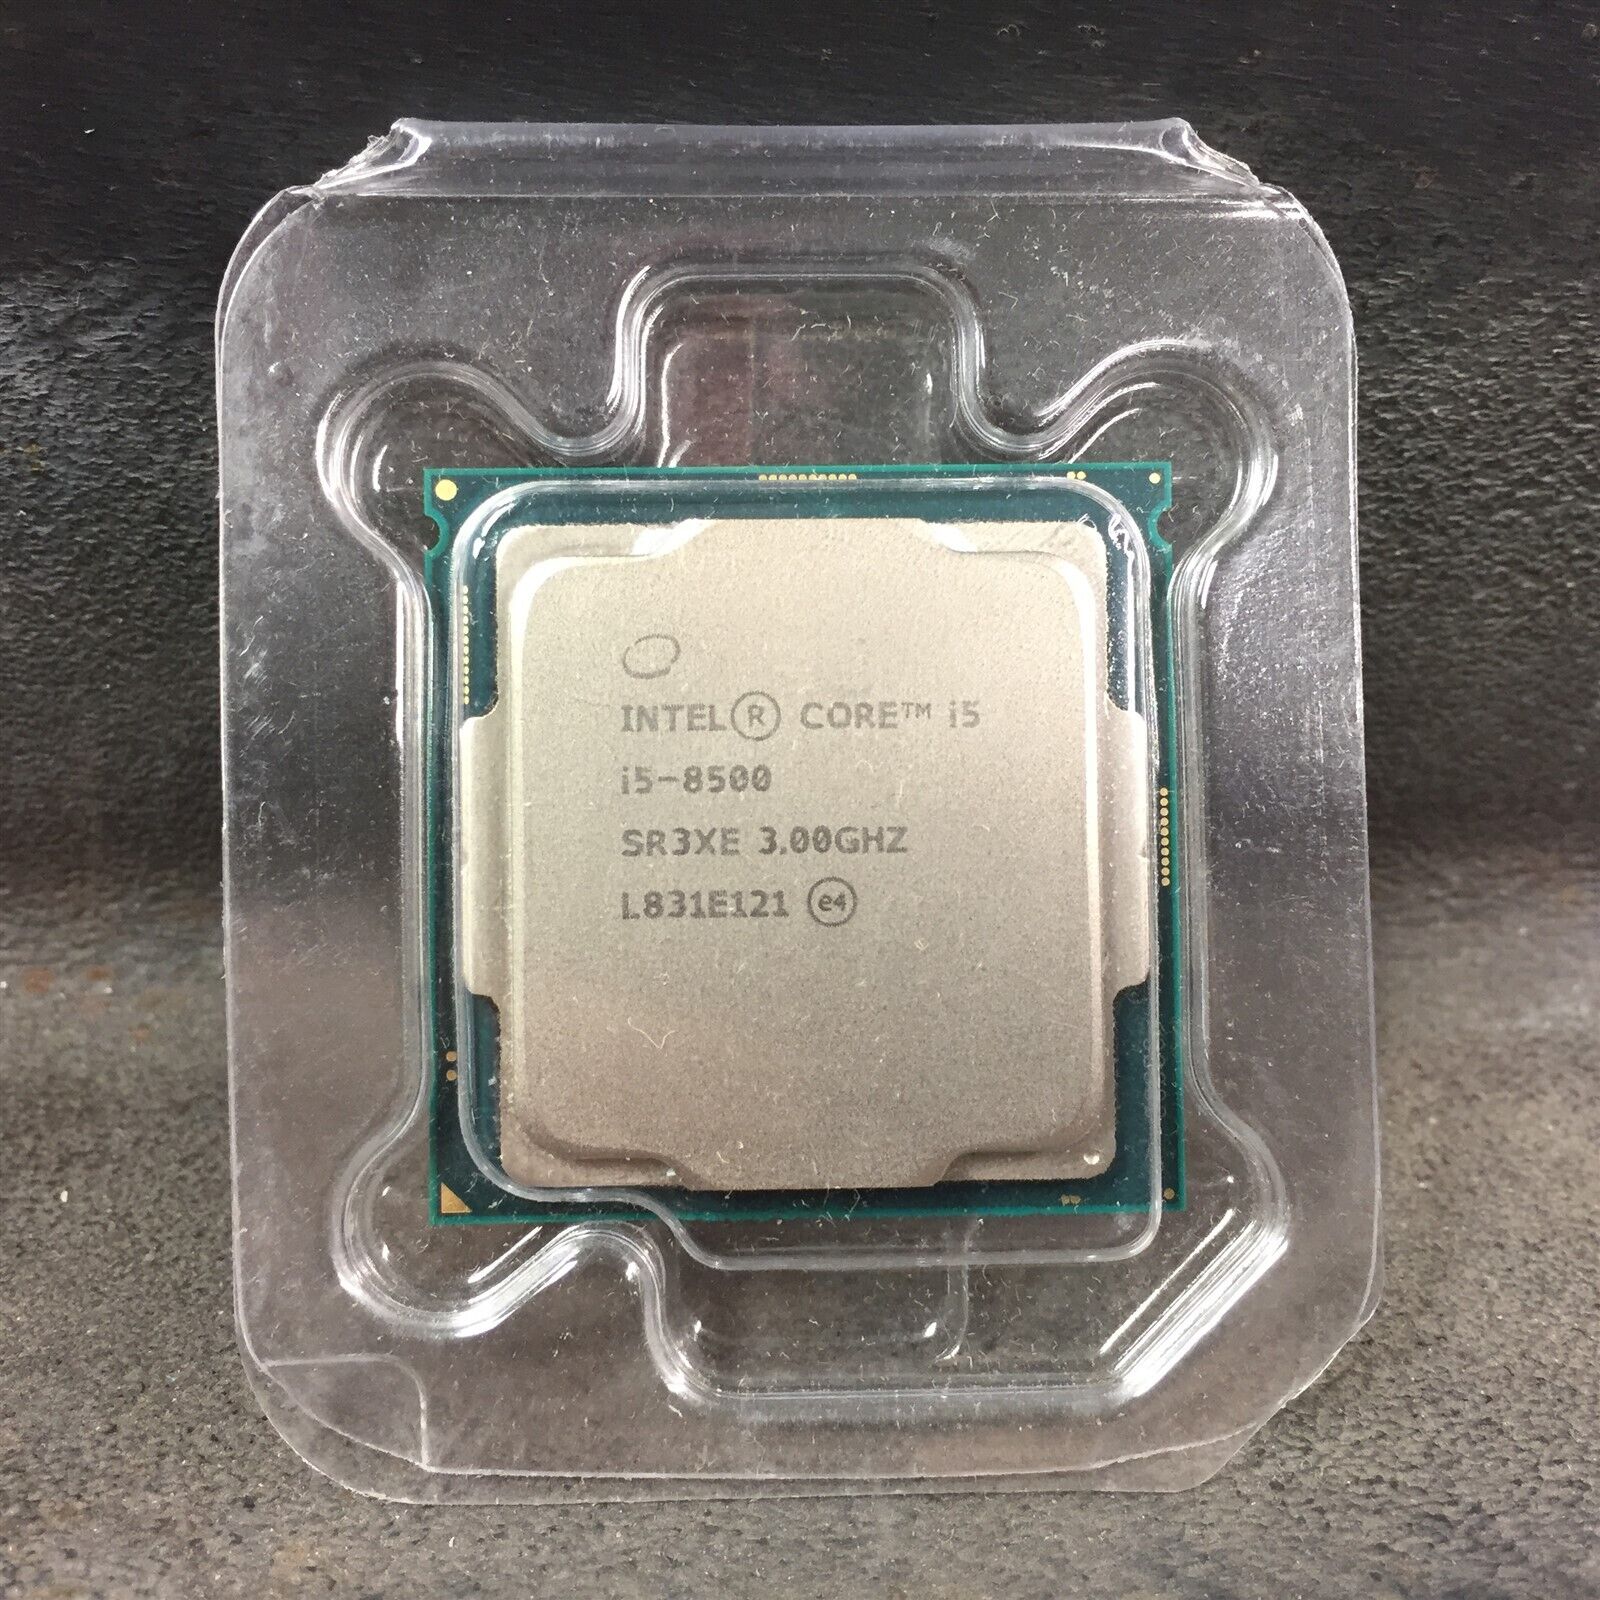 Intel Core i5-8500 SR3XE 3.0GHz 6 Core LGA1151 9MB Processor CPU Tested